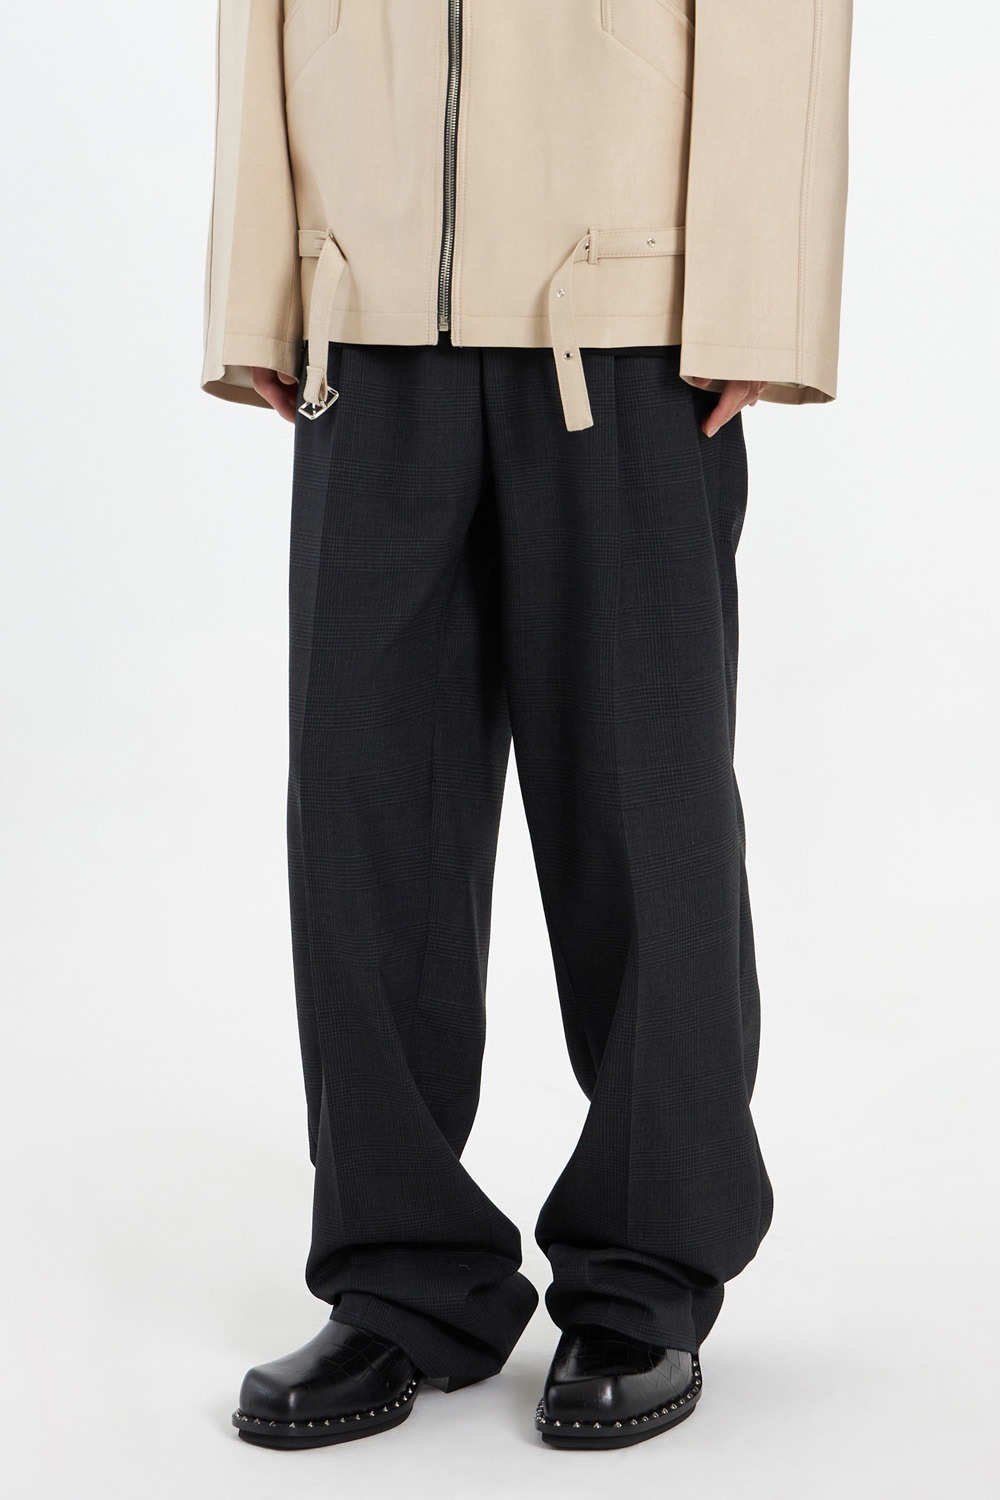 Glen Plaid Tuck Trousers_Charcoal Grey